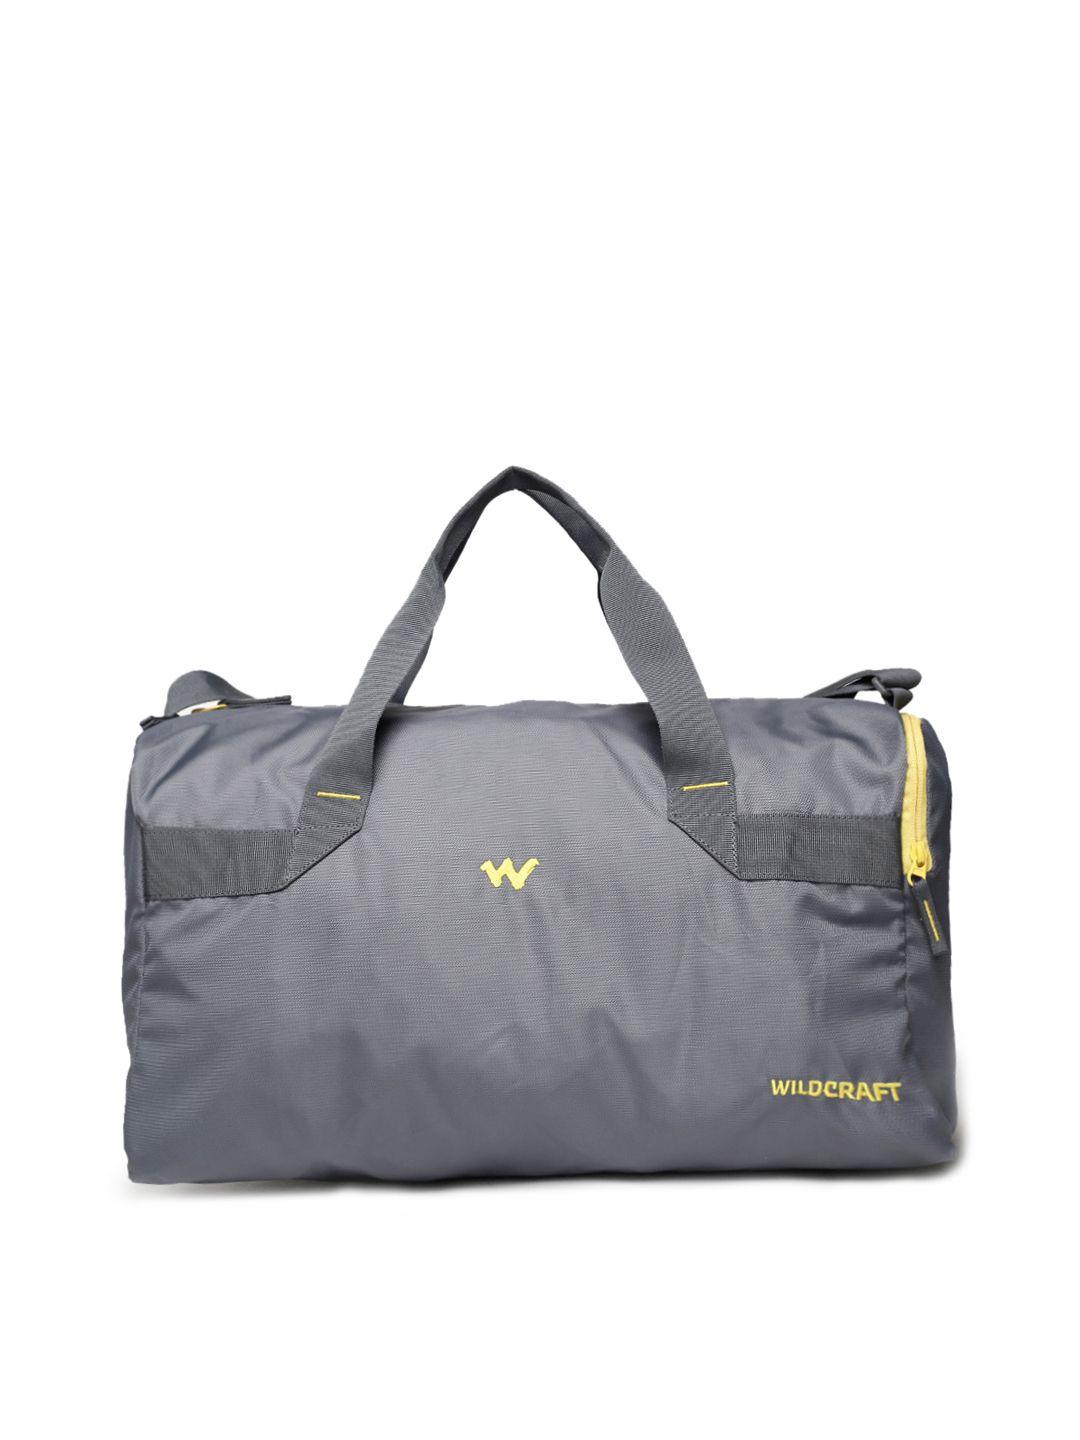 wildcraft-unisex-grey-tour-duffle-bag